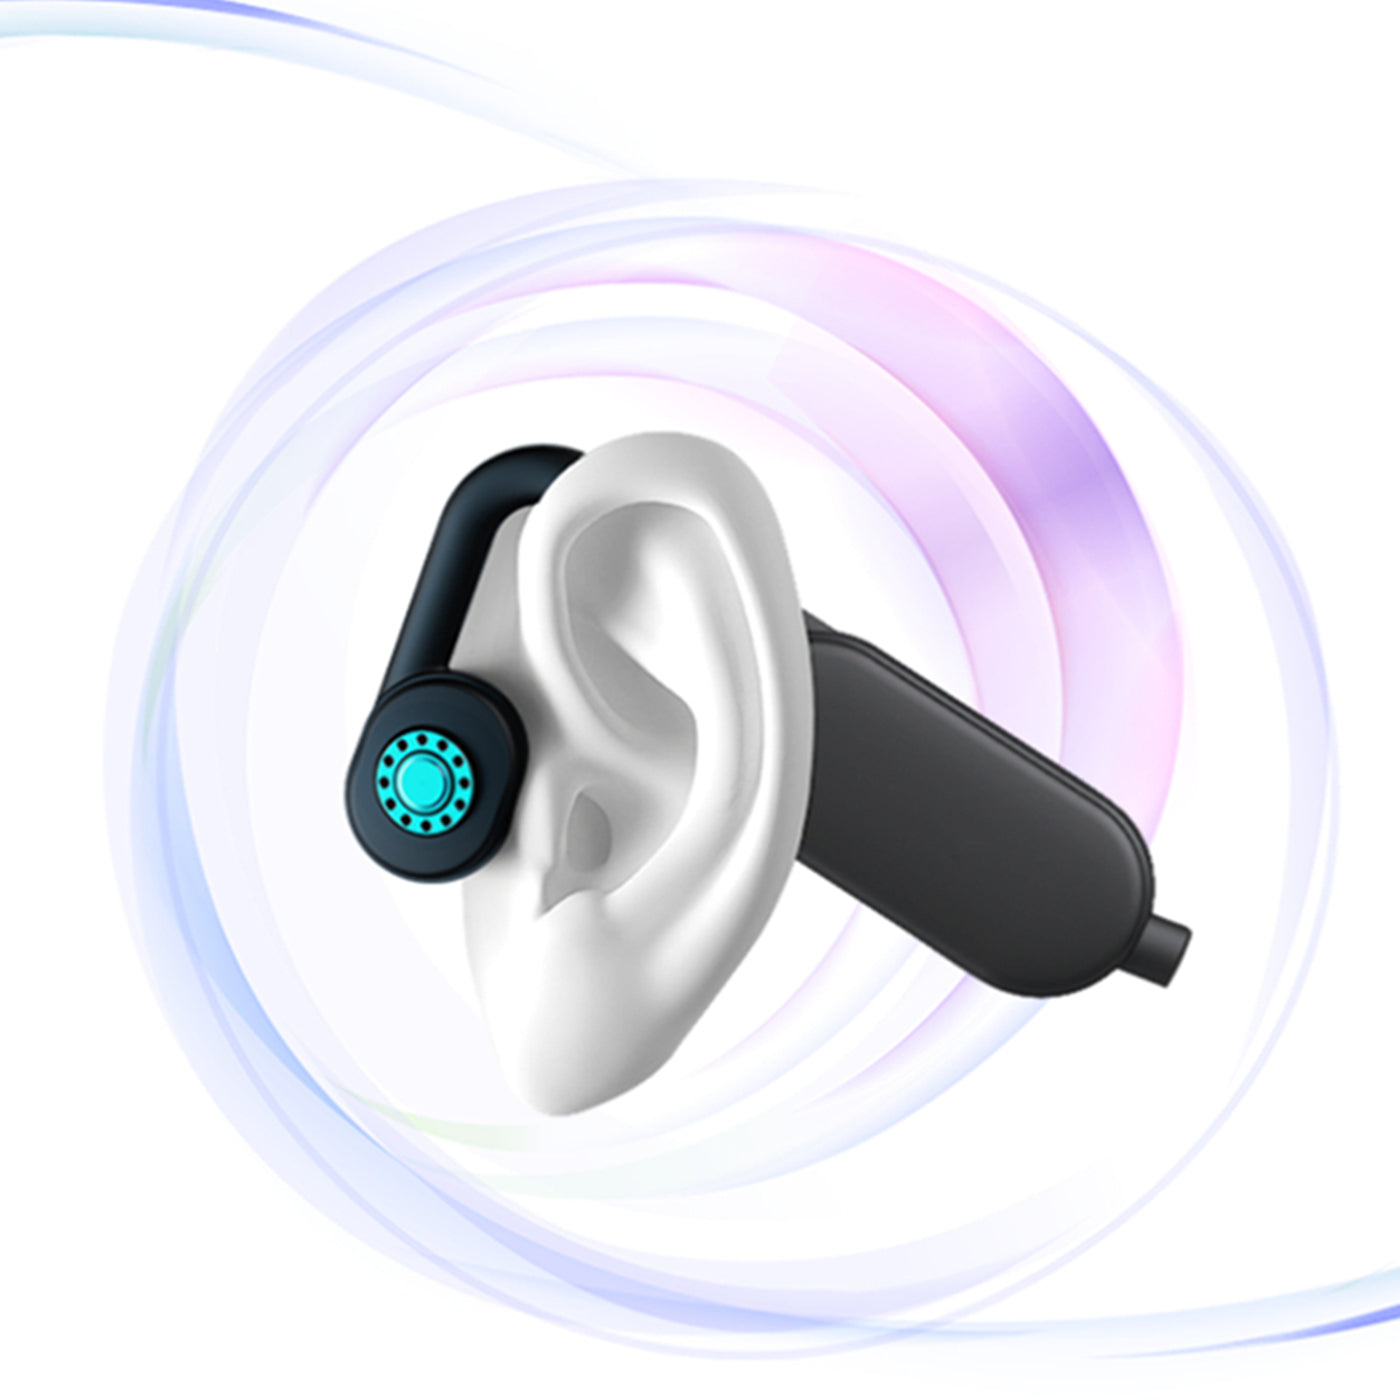 Wireless bone conduction headphones are worn on the ear